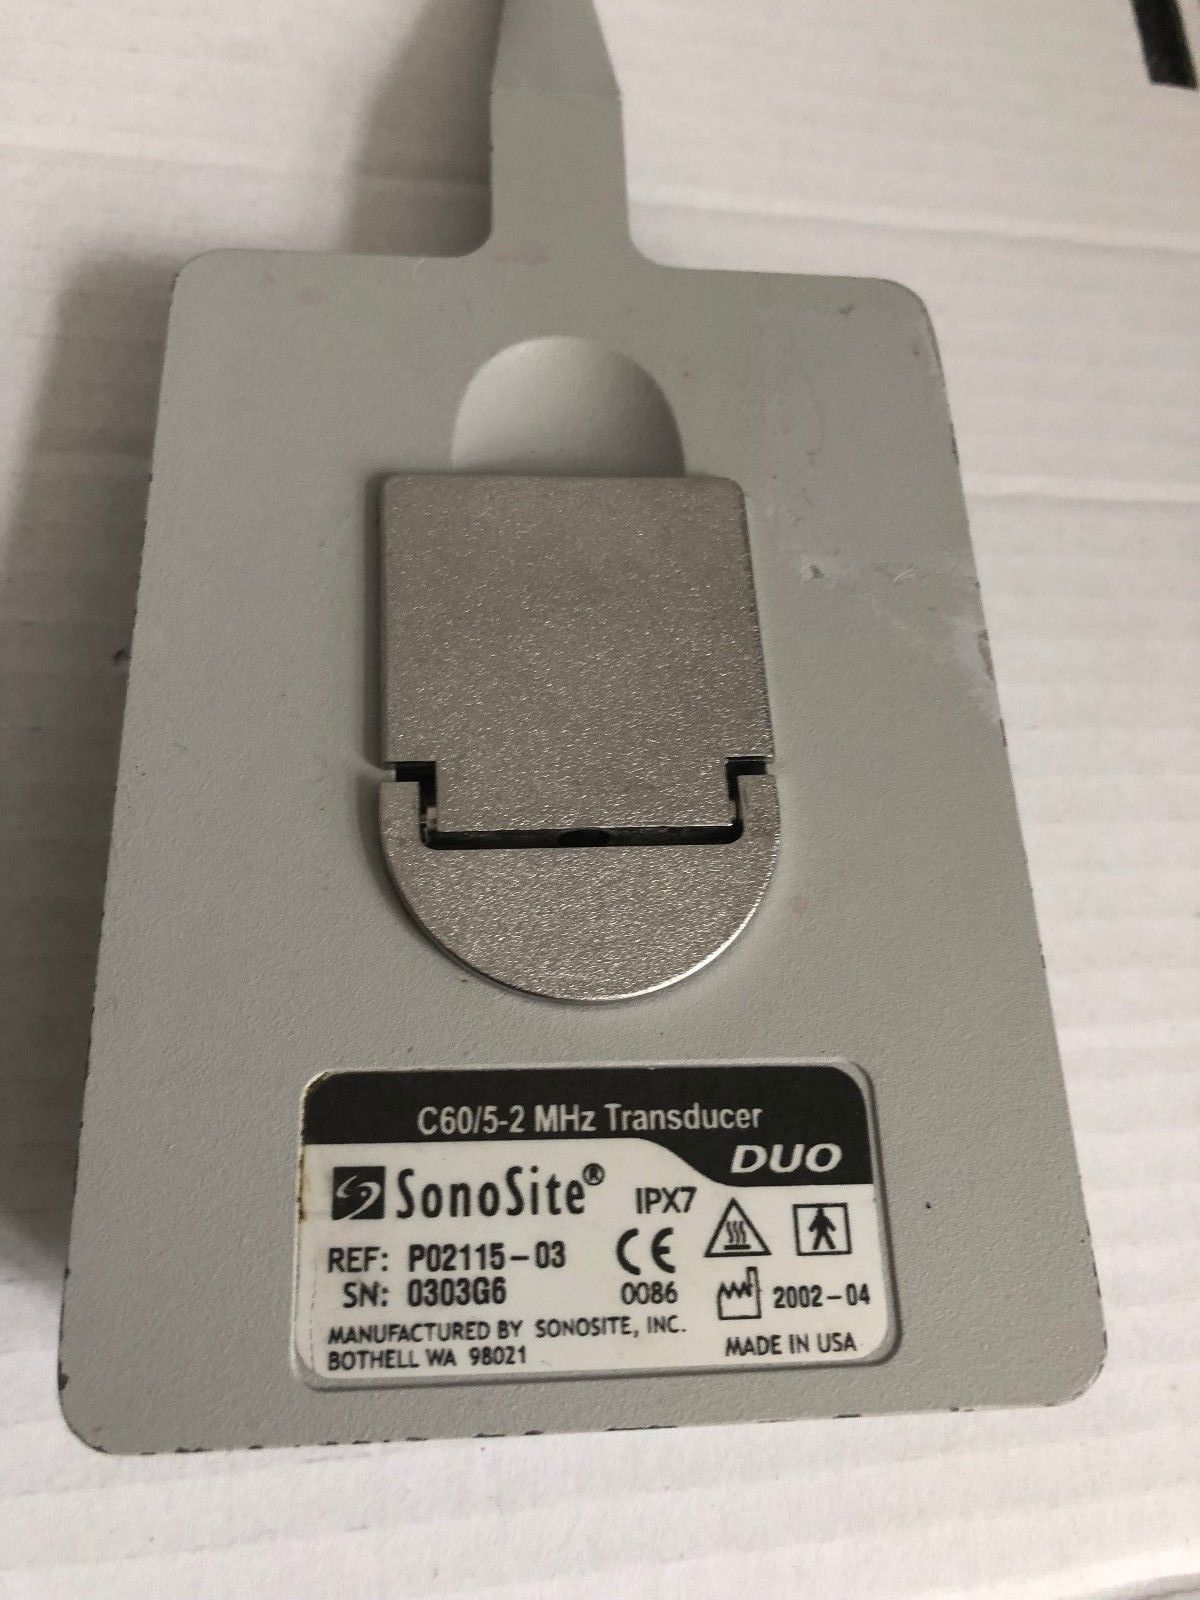 SonoSite Duo C60/5-2 MHz Ultrasound Transducer Probe S/N0303G6 Ref-P02115-03 DIAGNOSTIC ULTRASOUND MACHINES FOR SALE